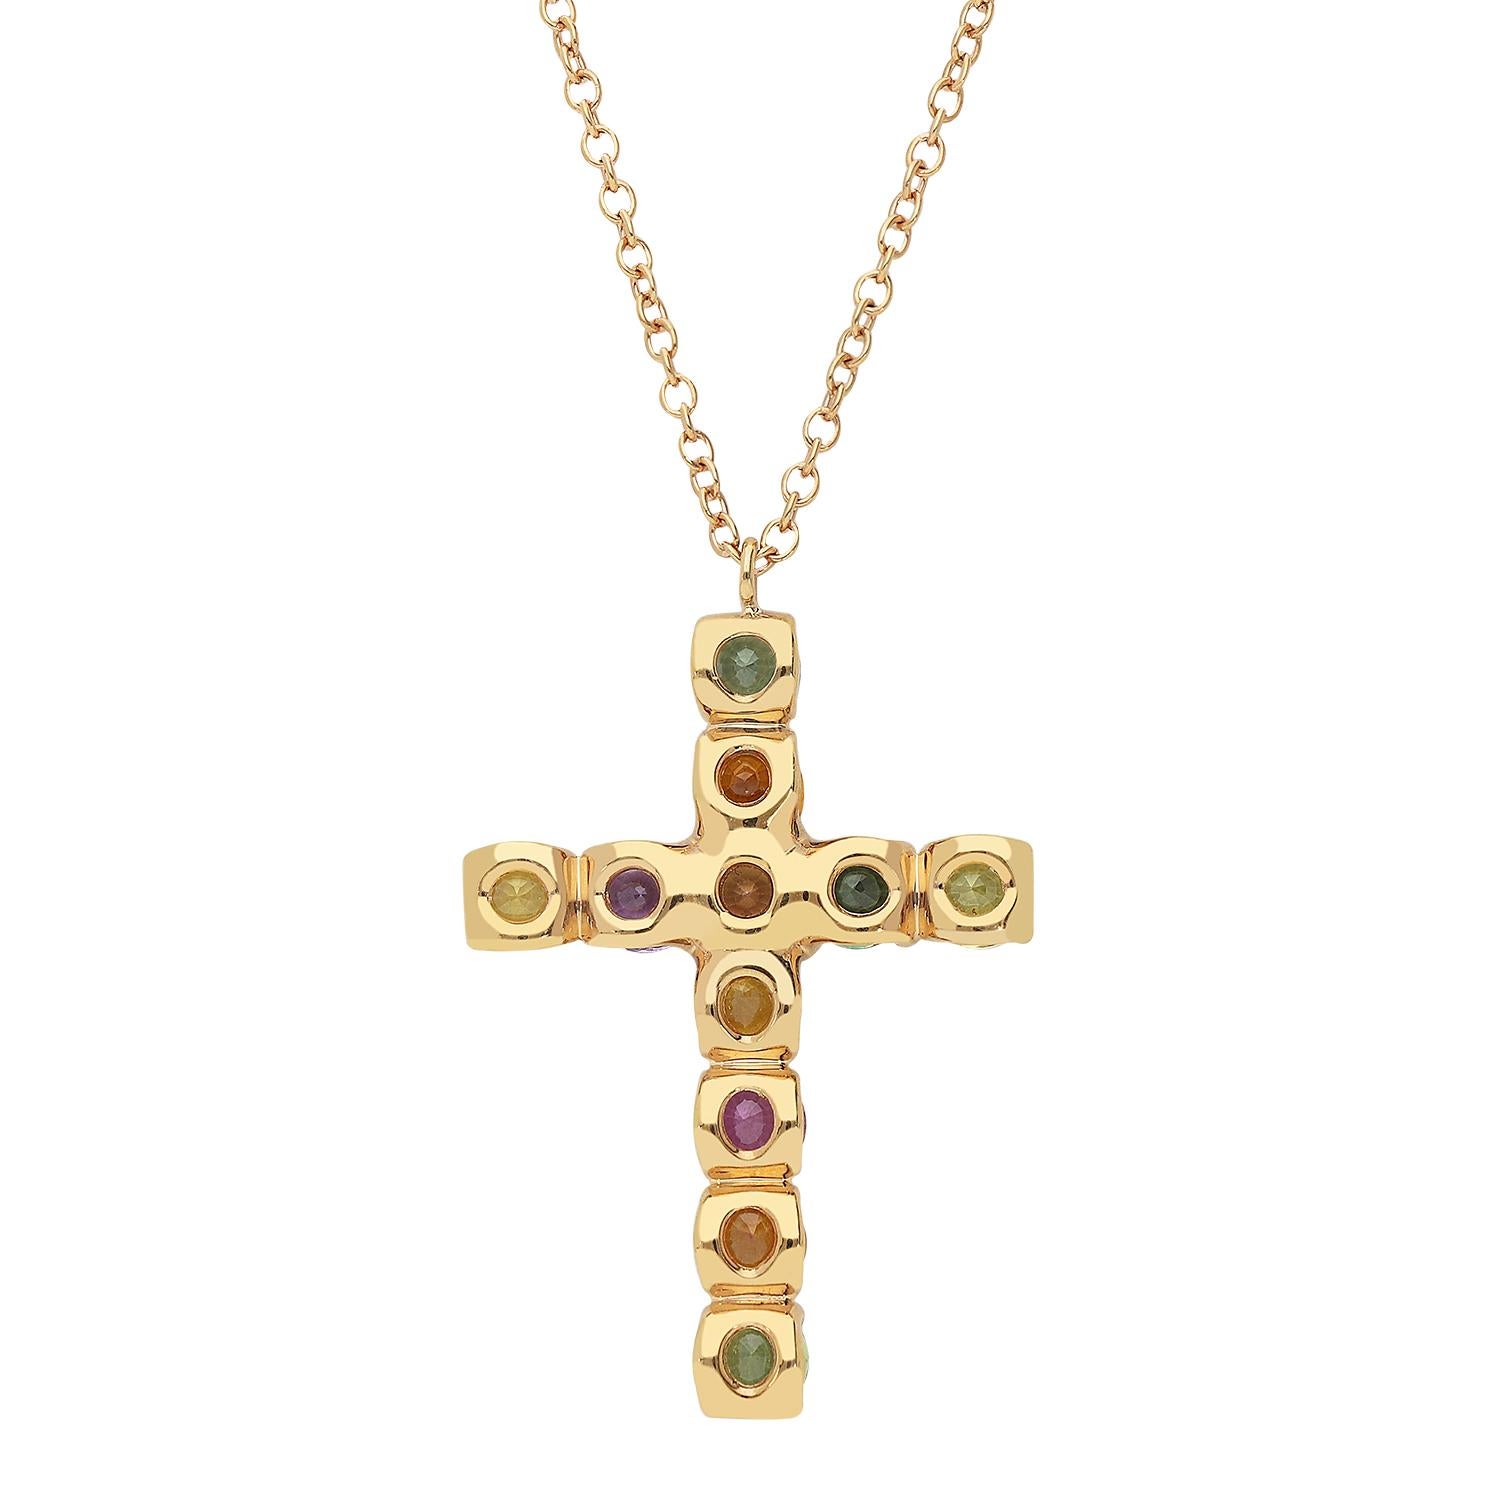 Brilliant Cut Pendant necklace with 18kt rose gold cross pendant For Sale